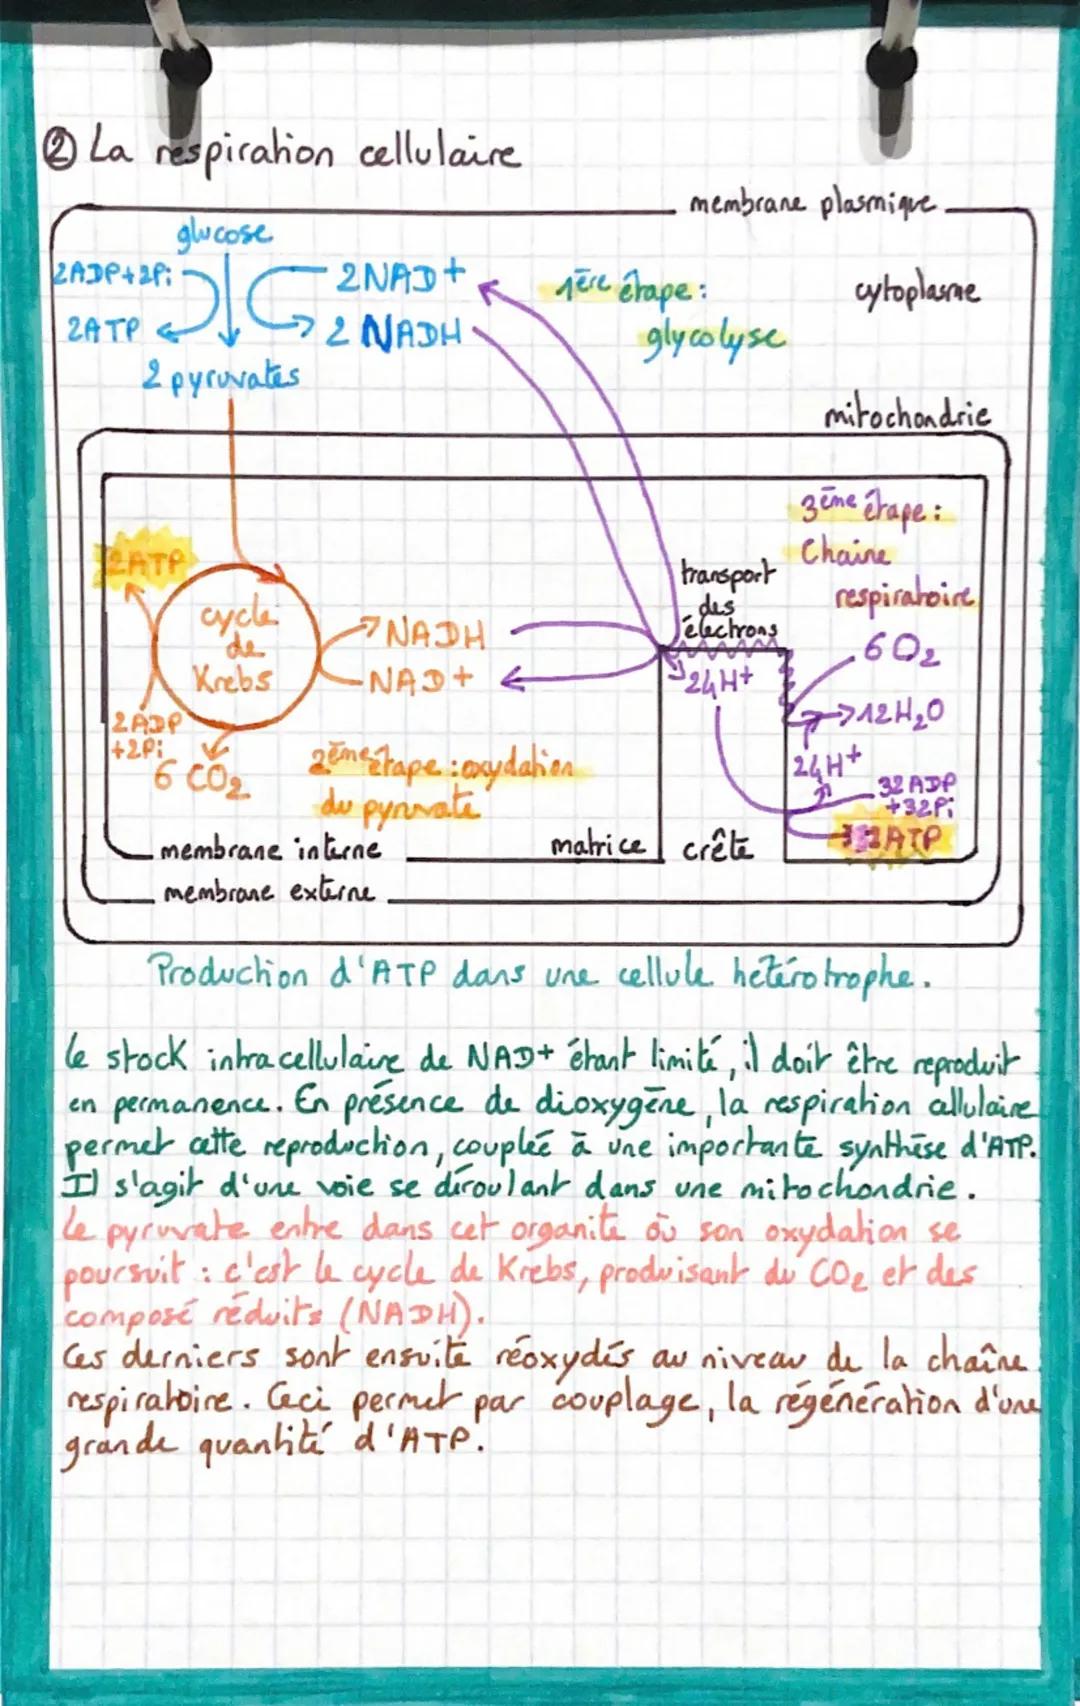 La respiration cellulaire
glucose
2ADP+2P:
2ATP
2 pyruvates
LATP
2ADP
+2P:
G₂
cycle
de
Krebs
2NAD+
2 NADH
6 CO₂
K
NADH
-NAD+ &
membrane inte